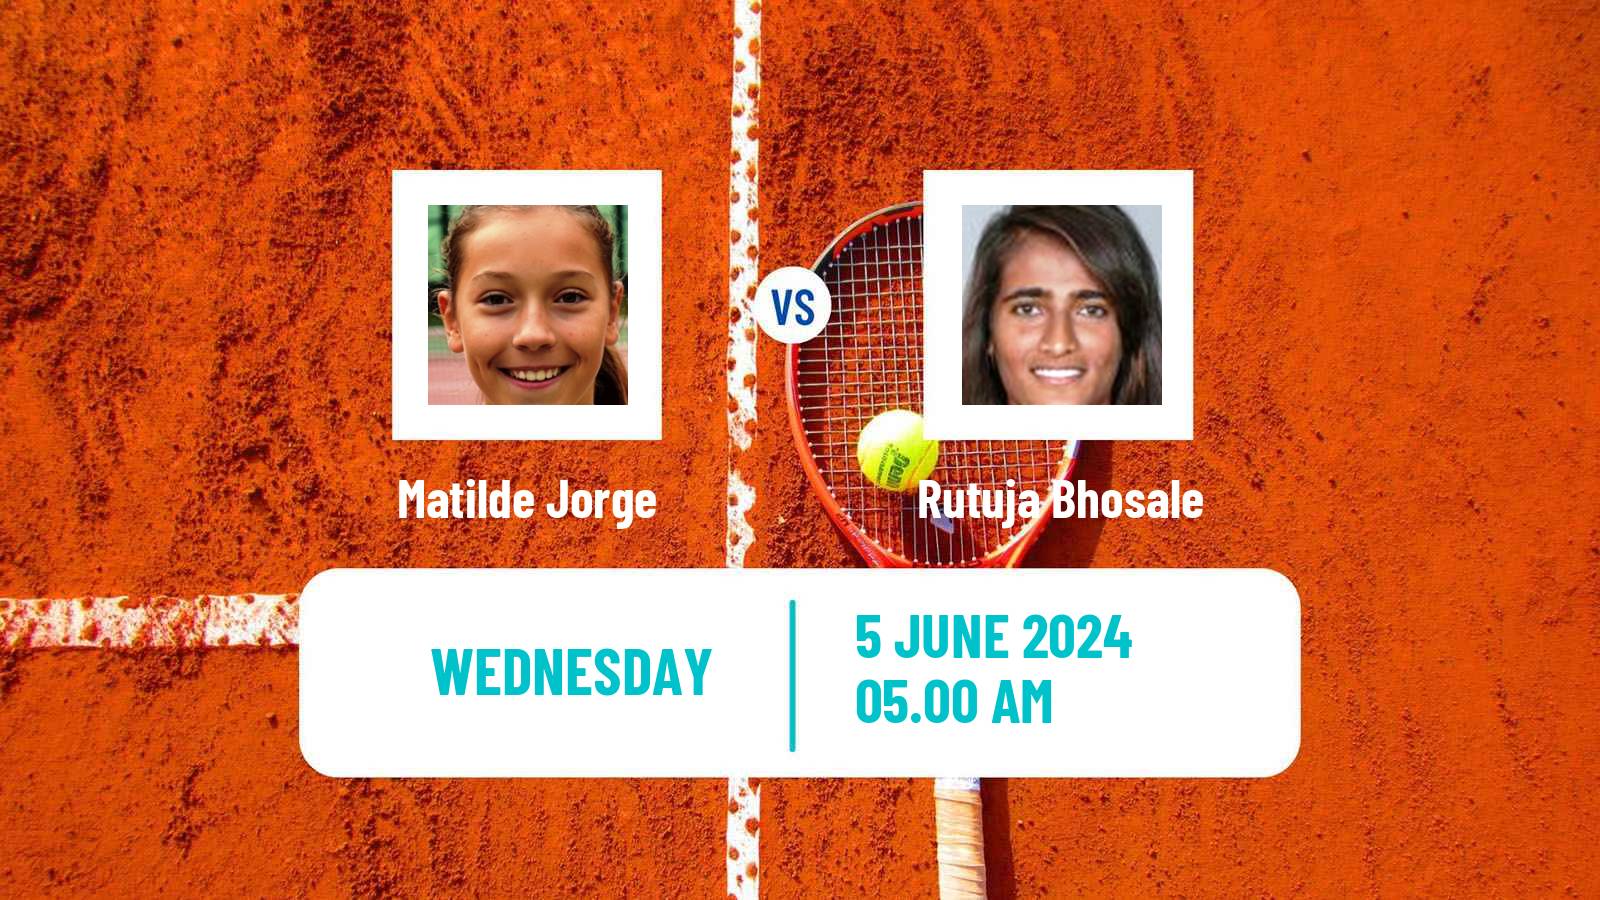 Tennis ITF W50 Montemor O Novo 2 Women Matilde Jorge - Rutuja Bhosale